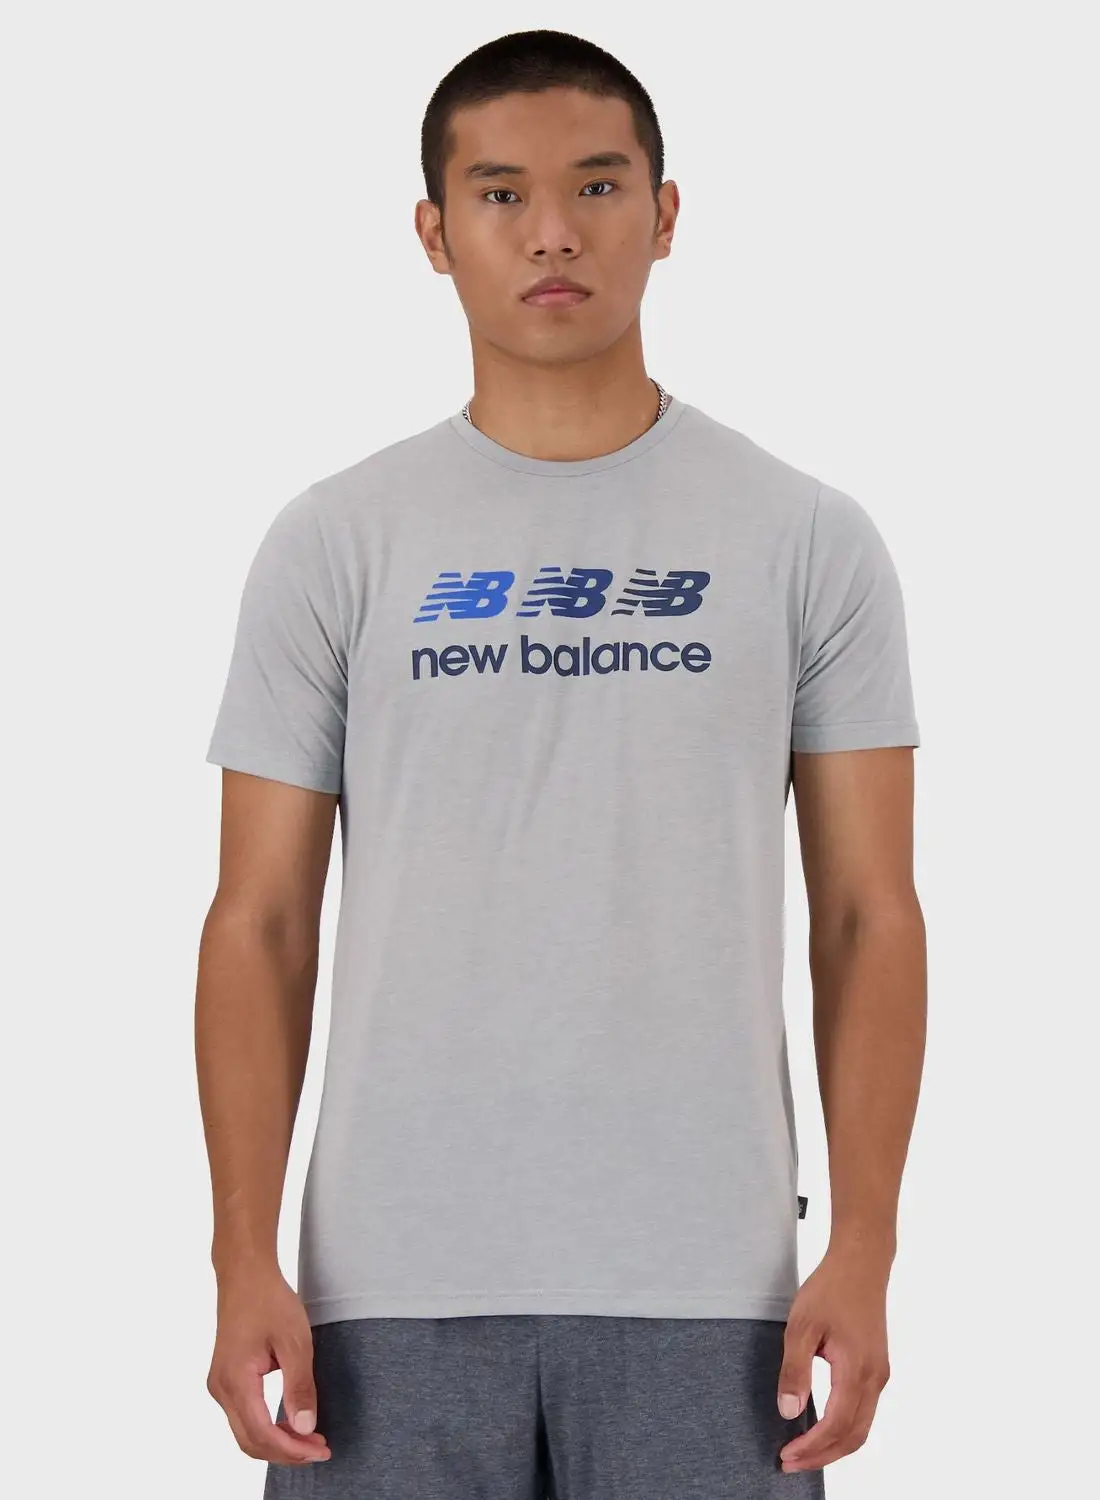 New Balance Heathertech Graphic T-Shirt